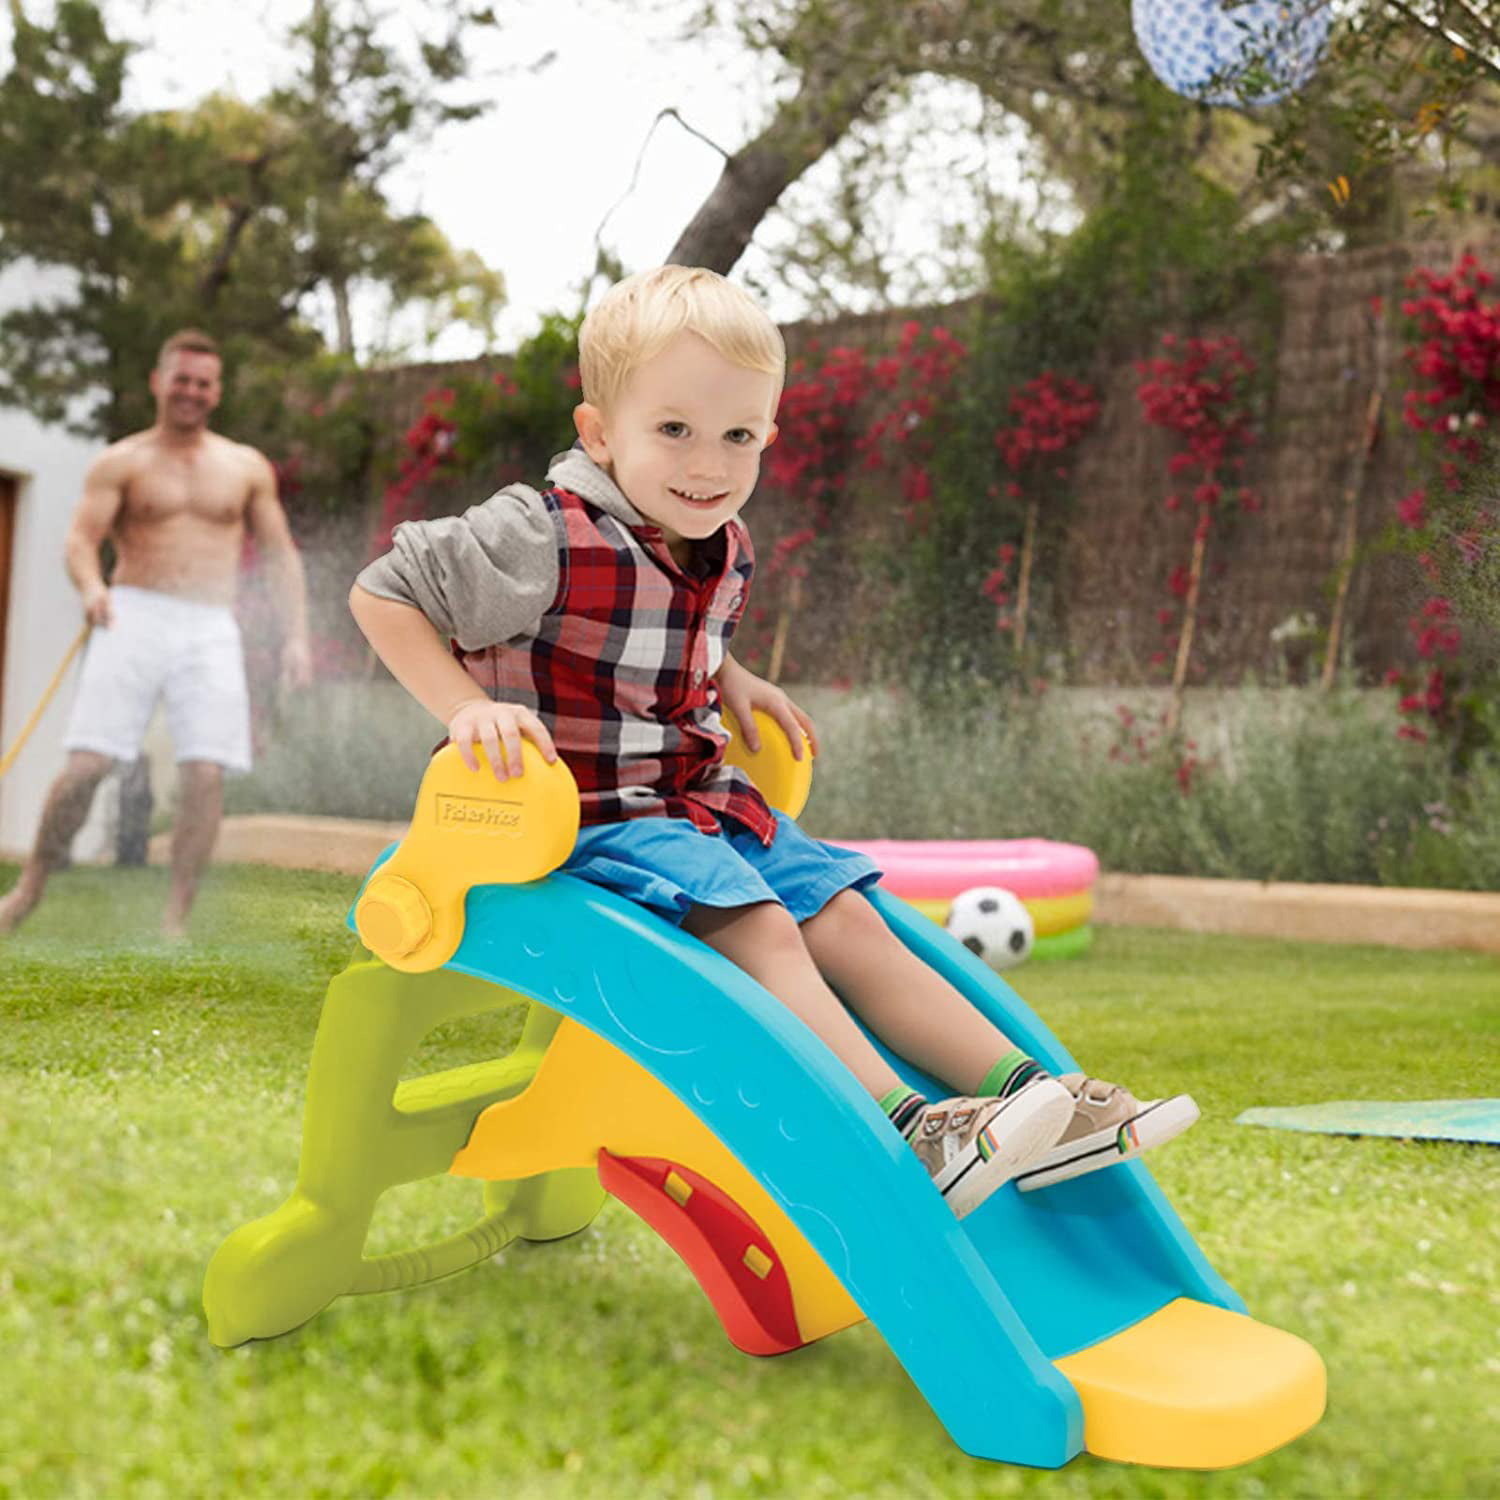 Scramble Slide Play Centre Swing Climb Hoop Outdoor Garden Kid Toddler Fun Play 